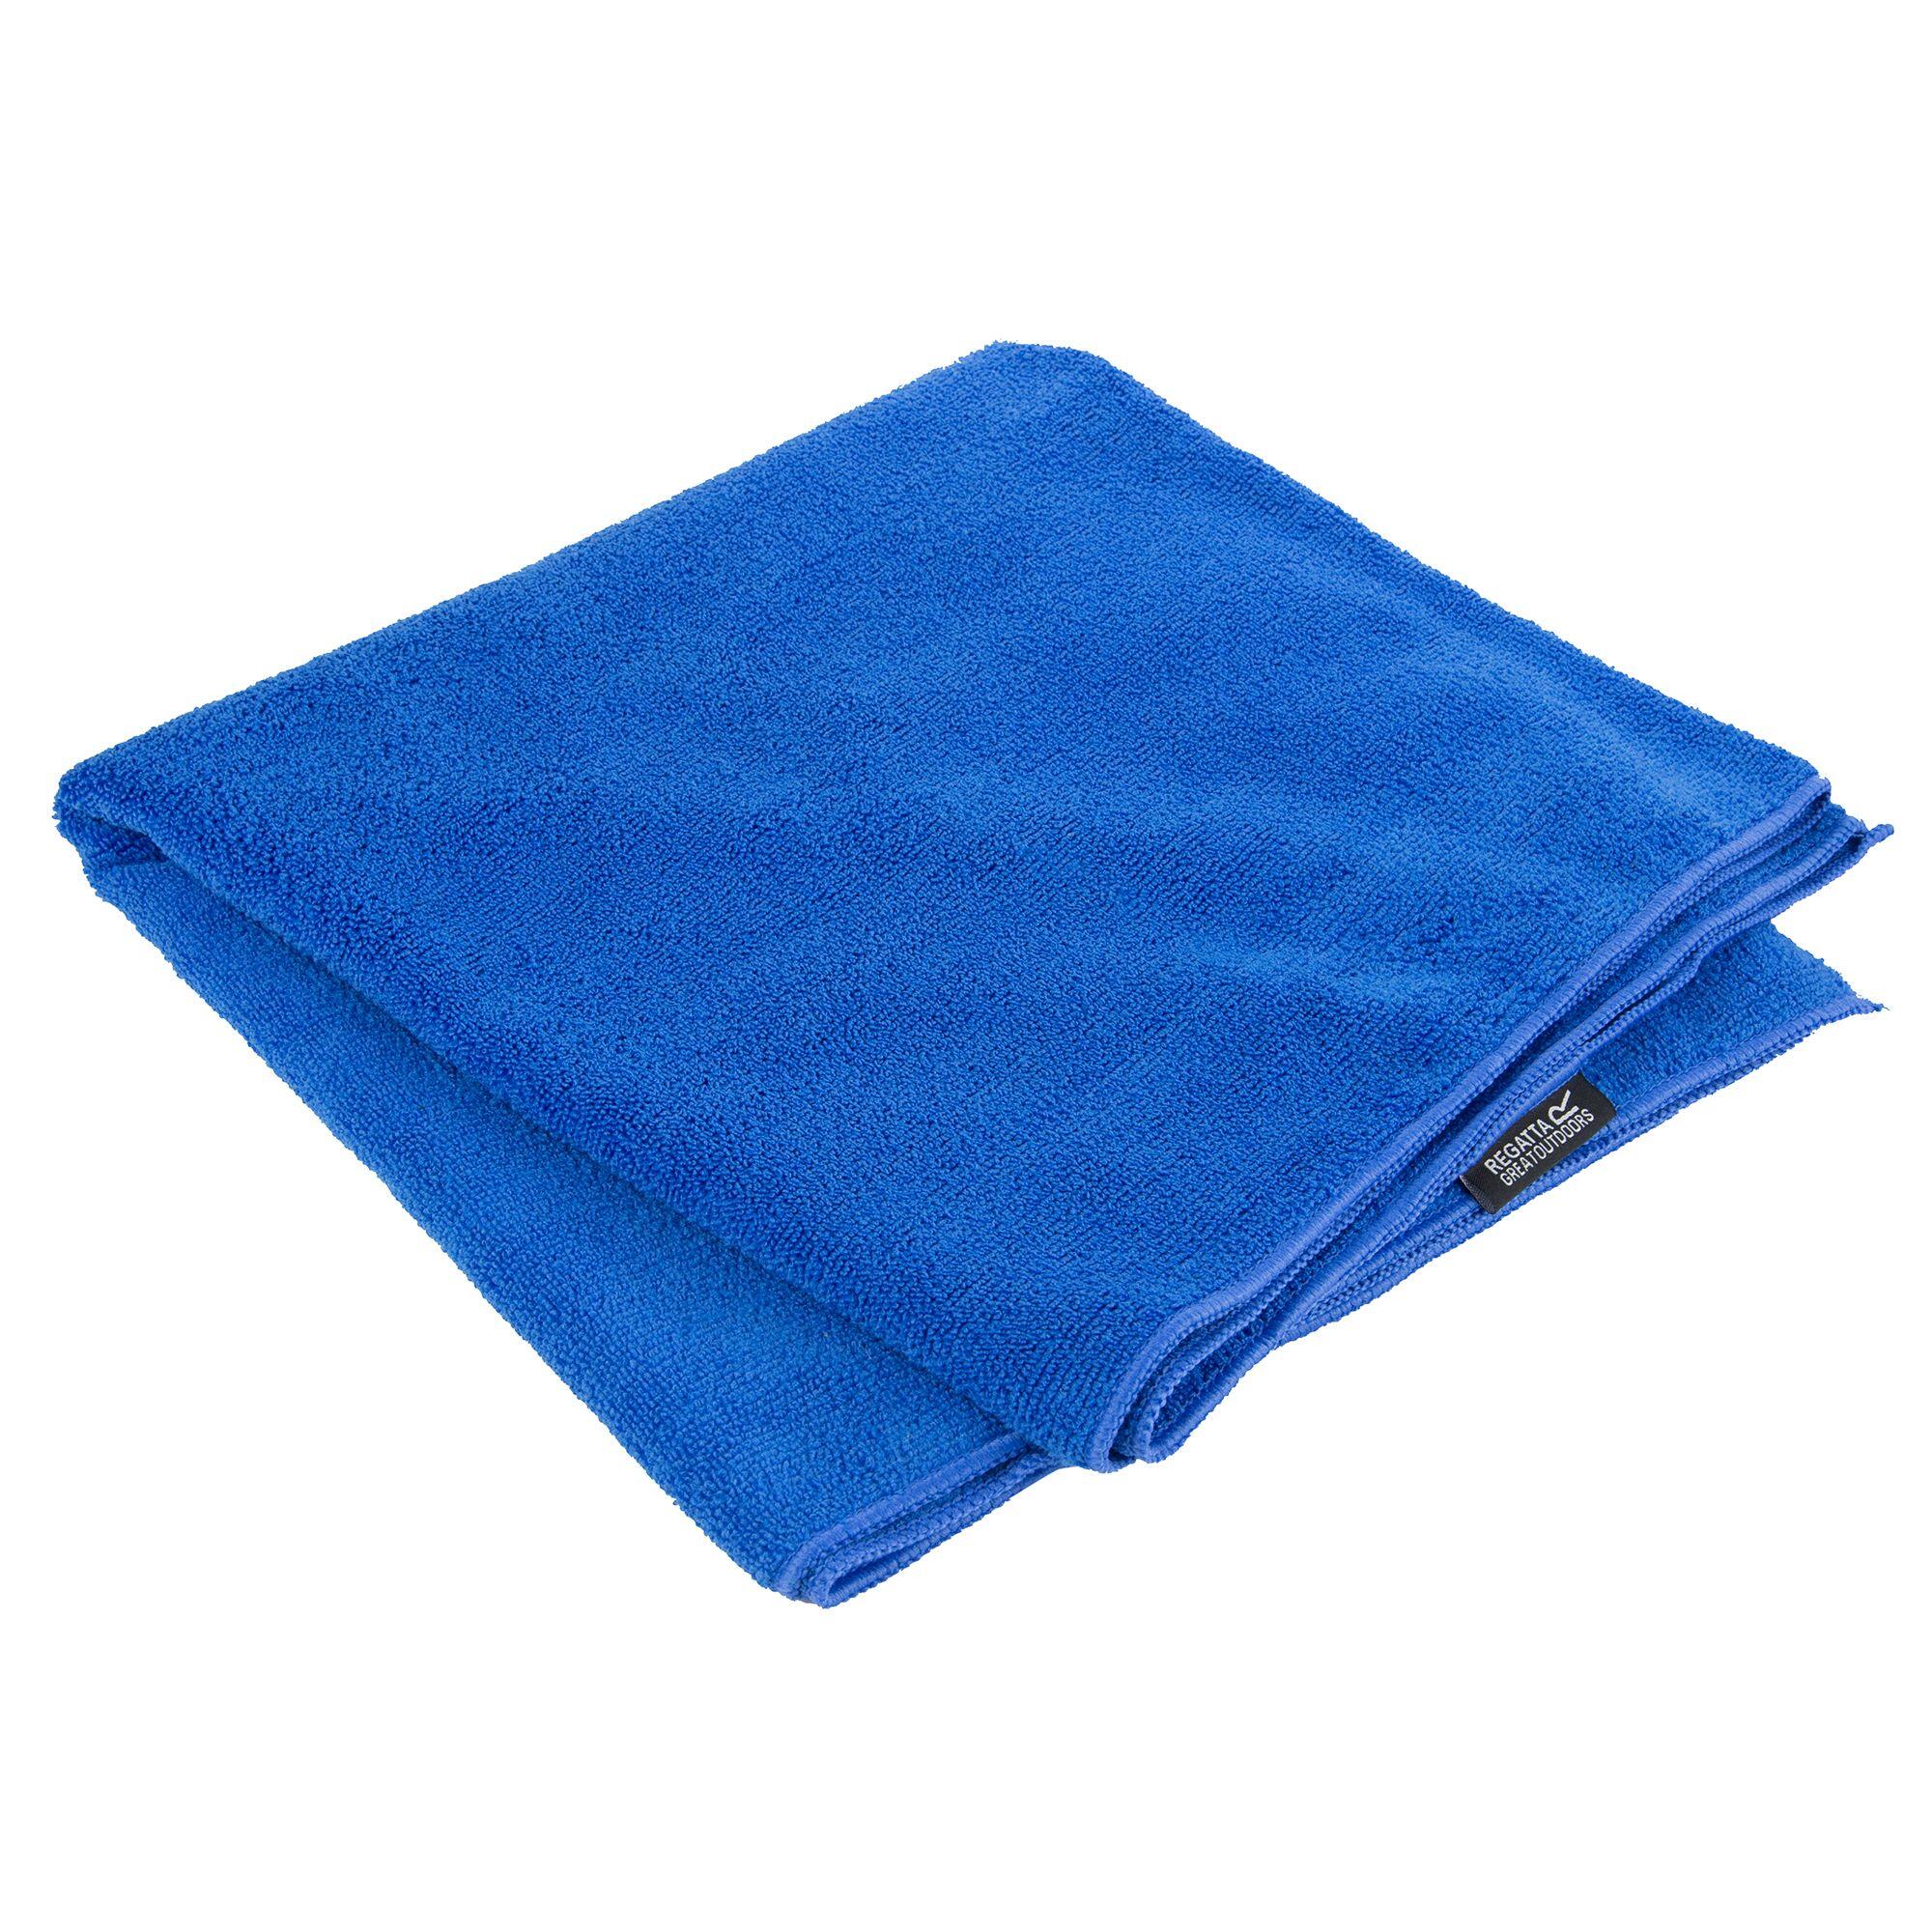 REGATTA Great Outdoors Lightweight Large Compact Travel Towel (Oxford Blue)